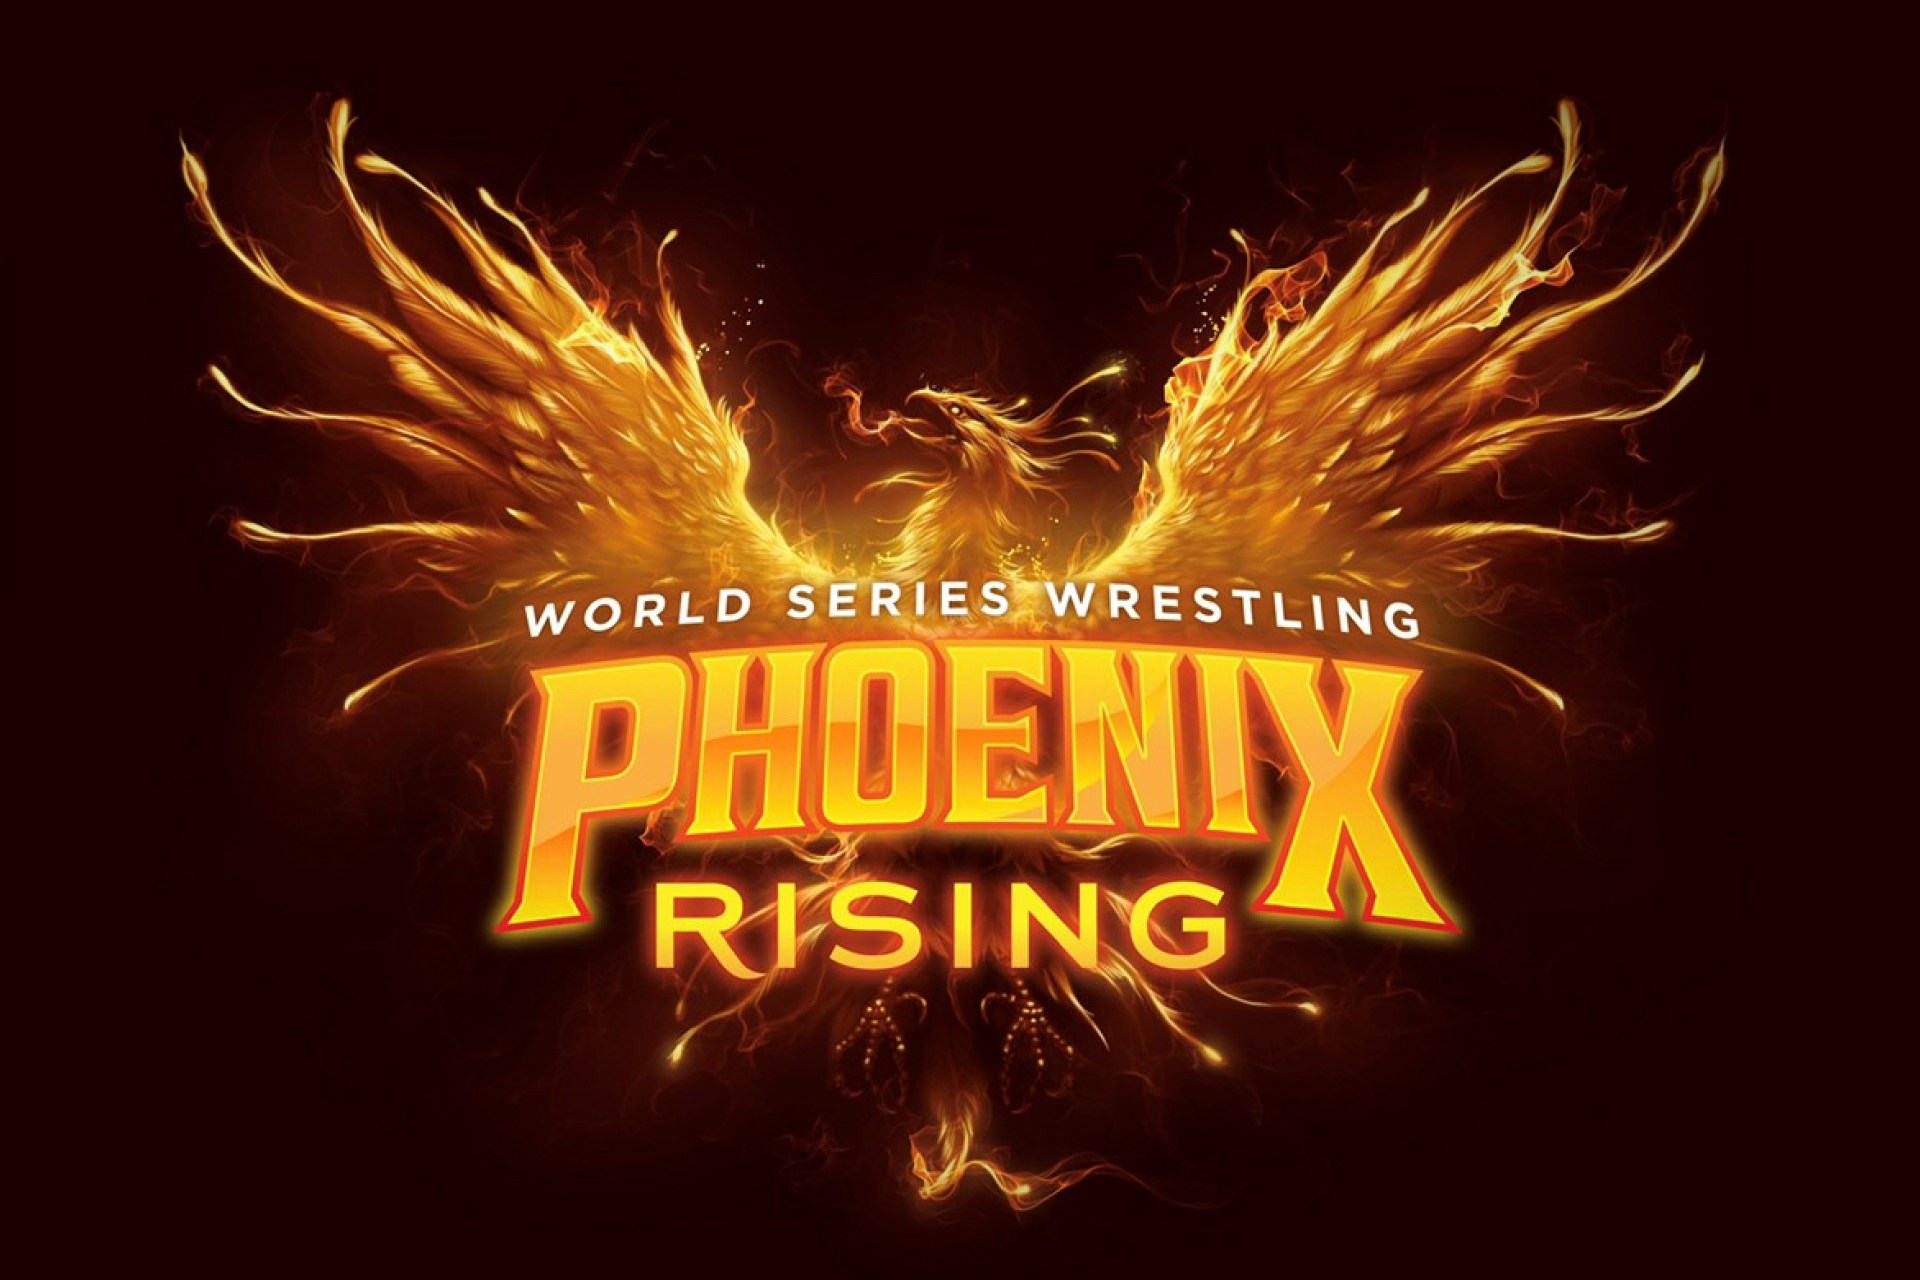 World Series Wrestling - Presents Phoenix Rising